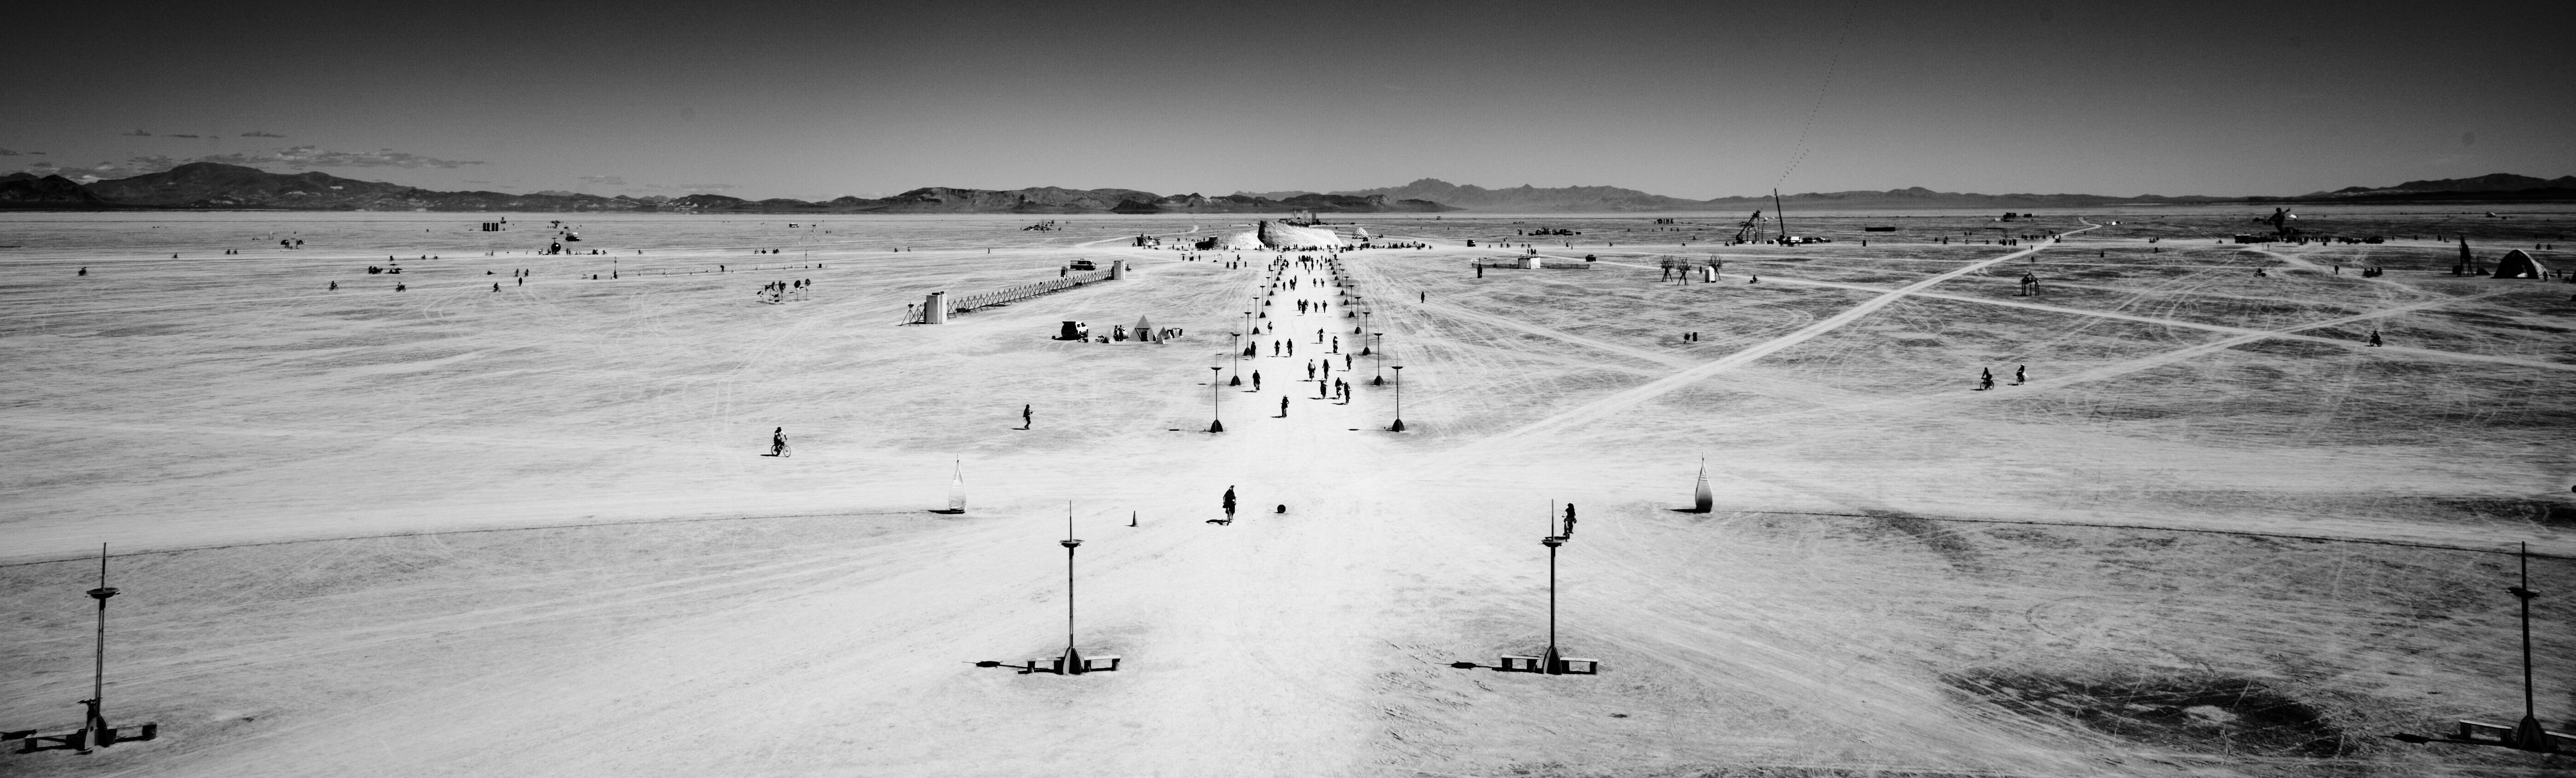 Tao Ruspoli Landscape Photograph - Vanishing Point (Burning Man)